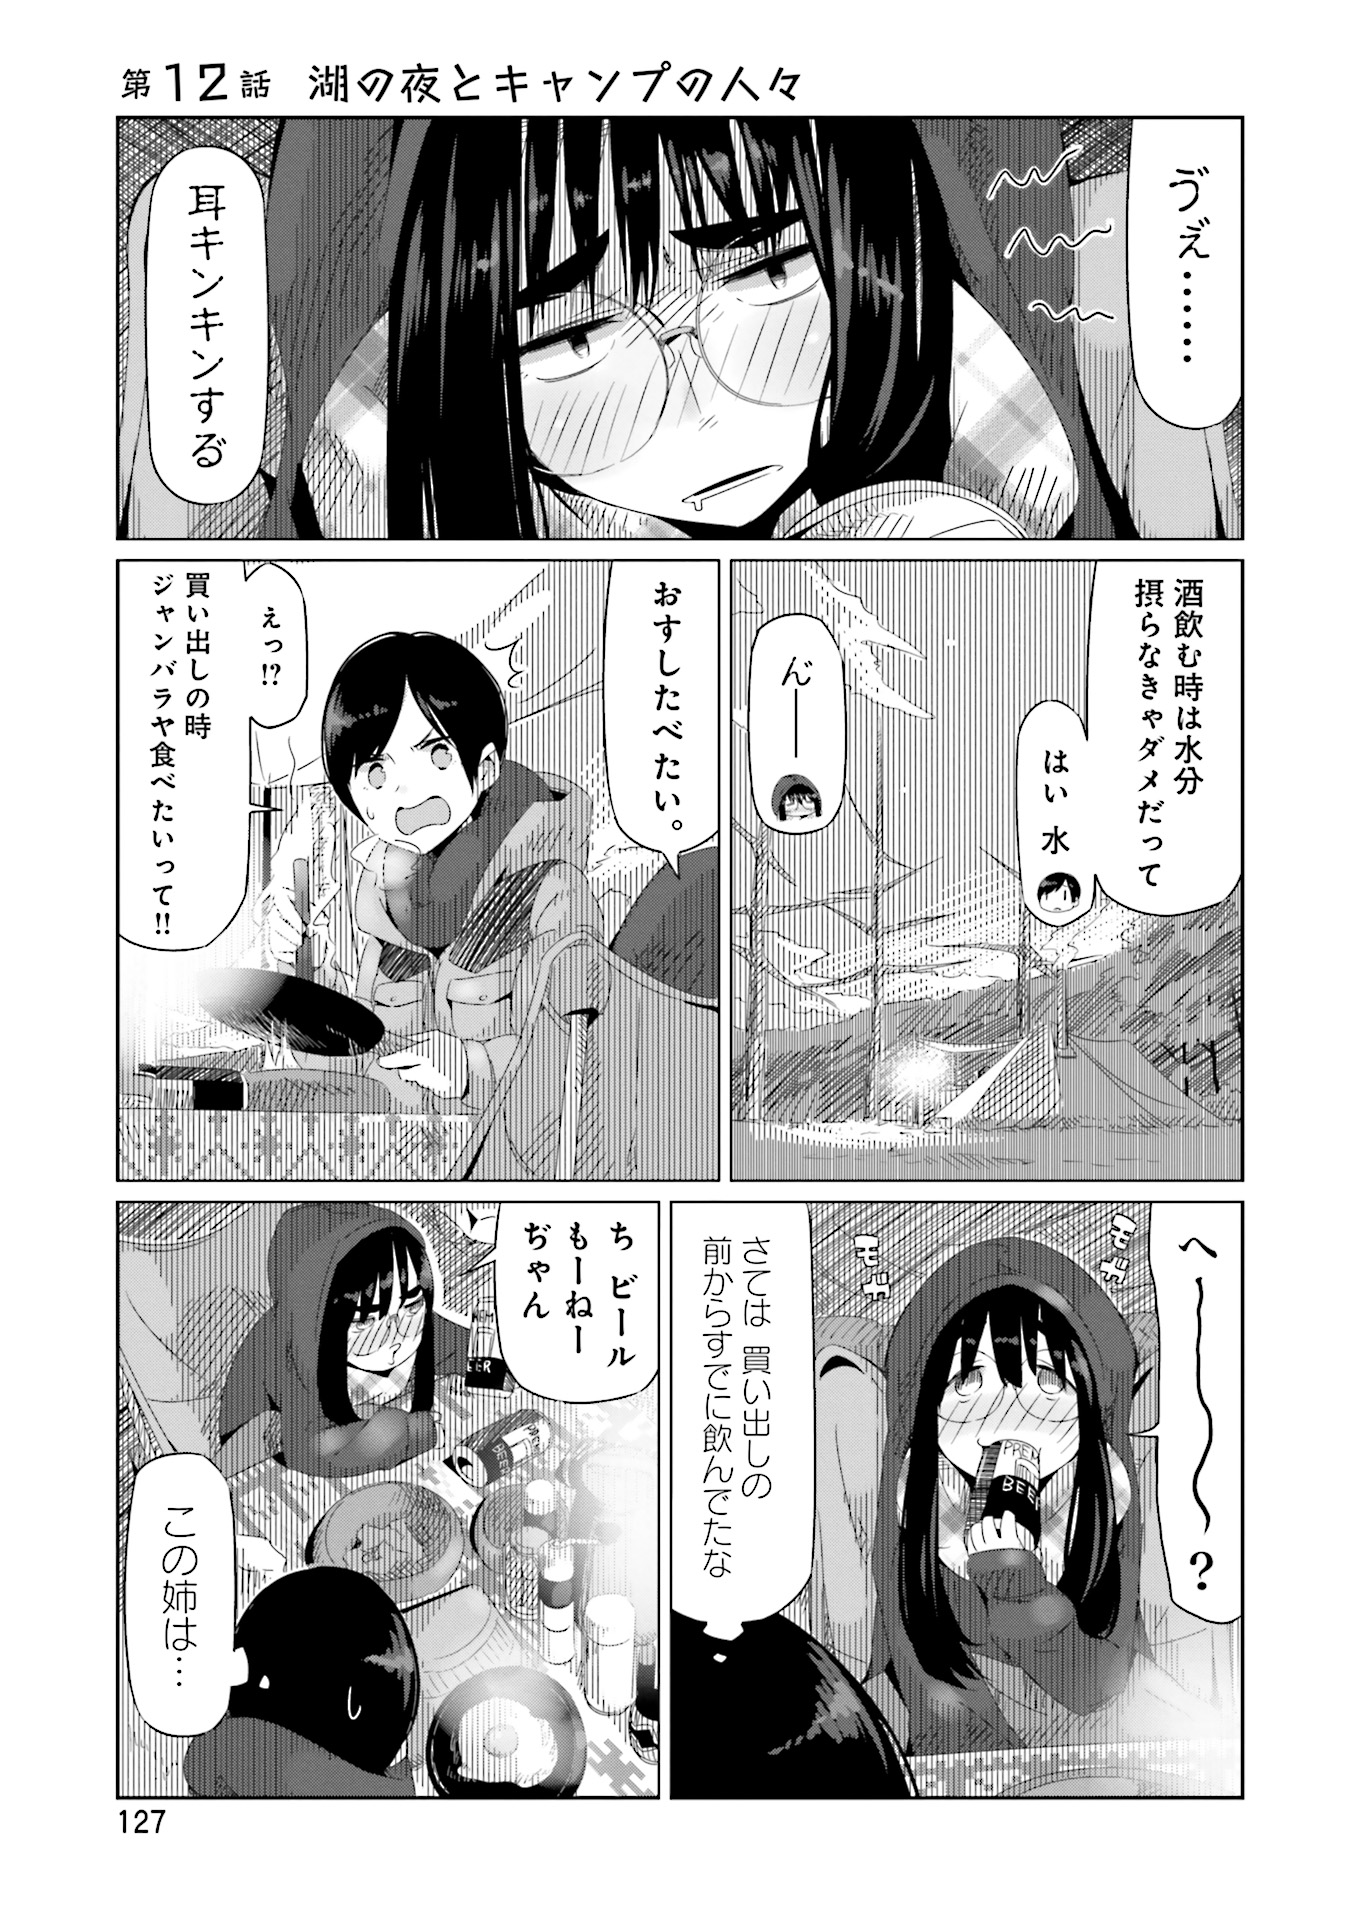 Yuru Camp - Chapter 12 - Page 2